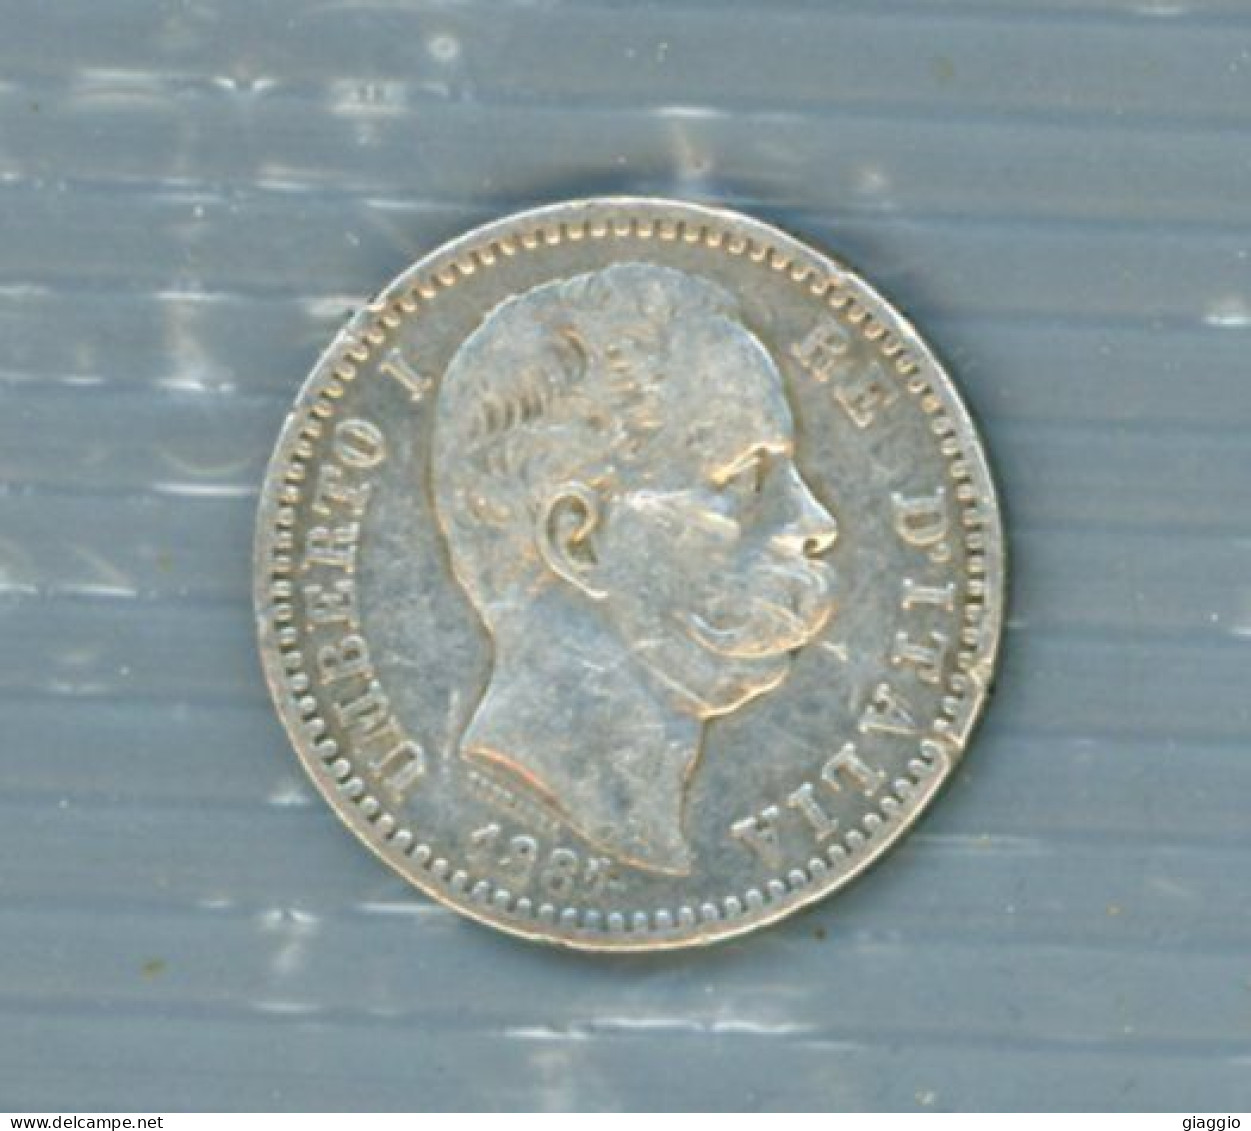 °°° Moneta N. 746 - Italia Regno Umberto 1° 2 Lire 1881 Silver °°° - 1878-1900 : Umberto I